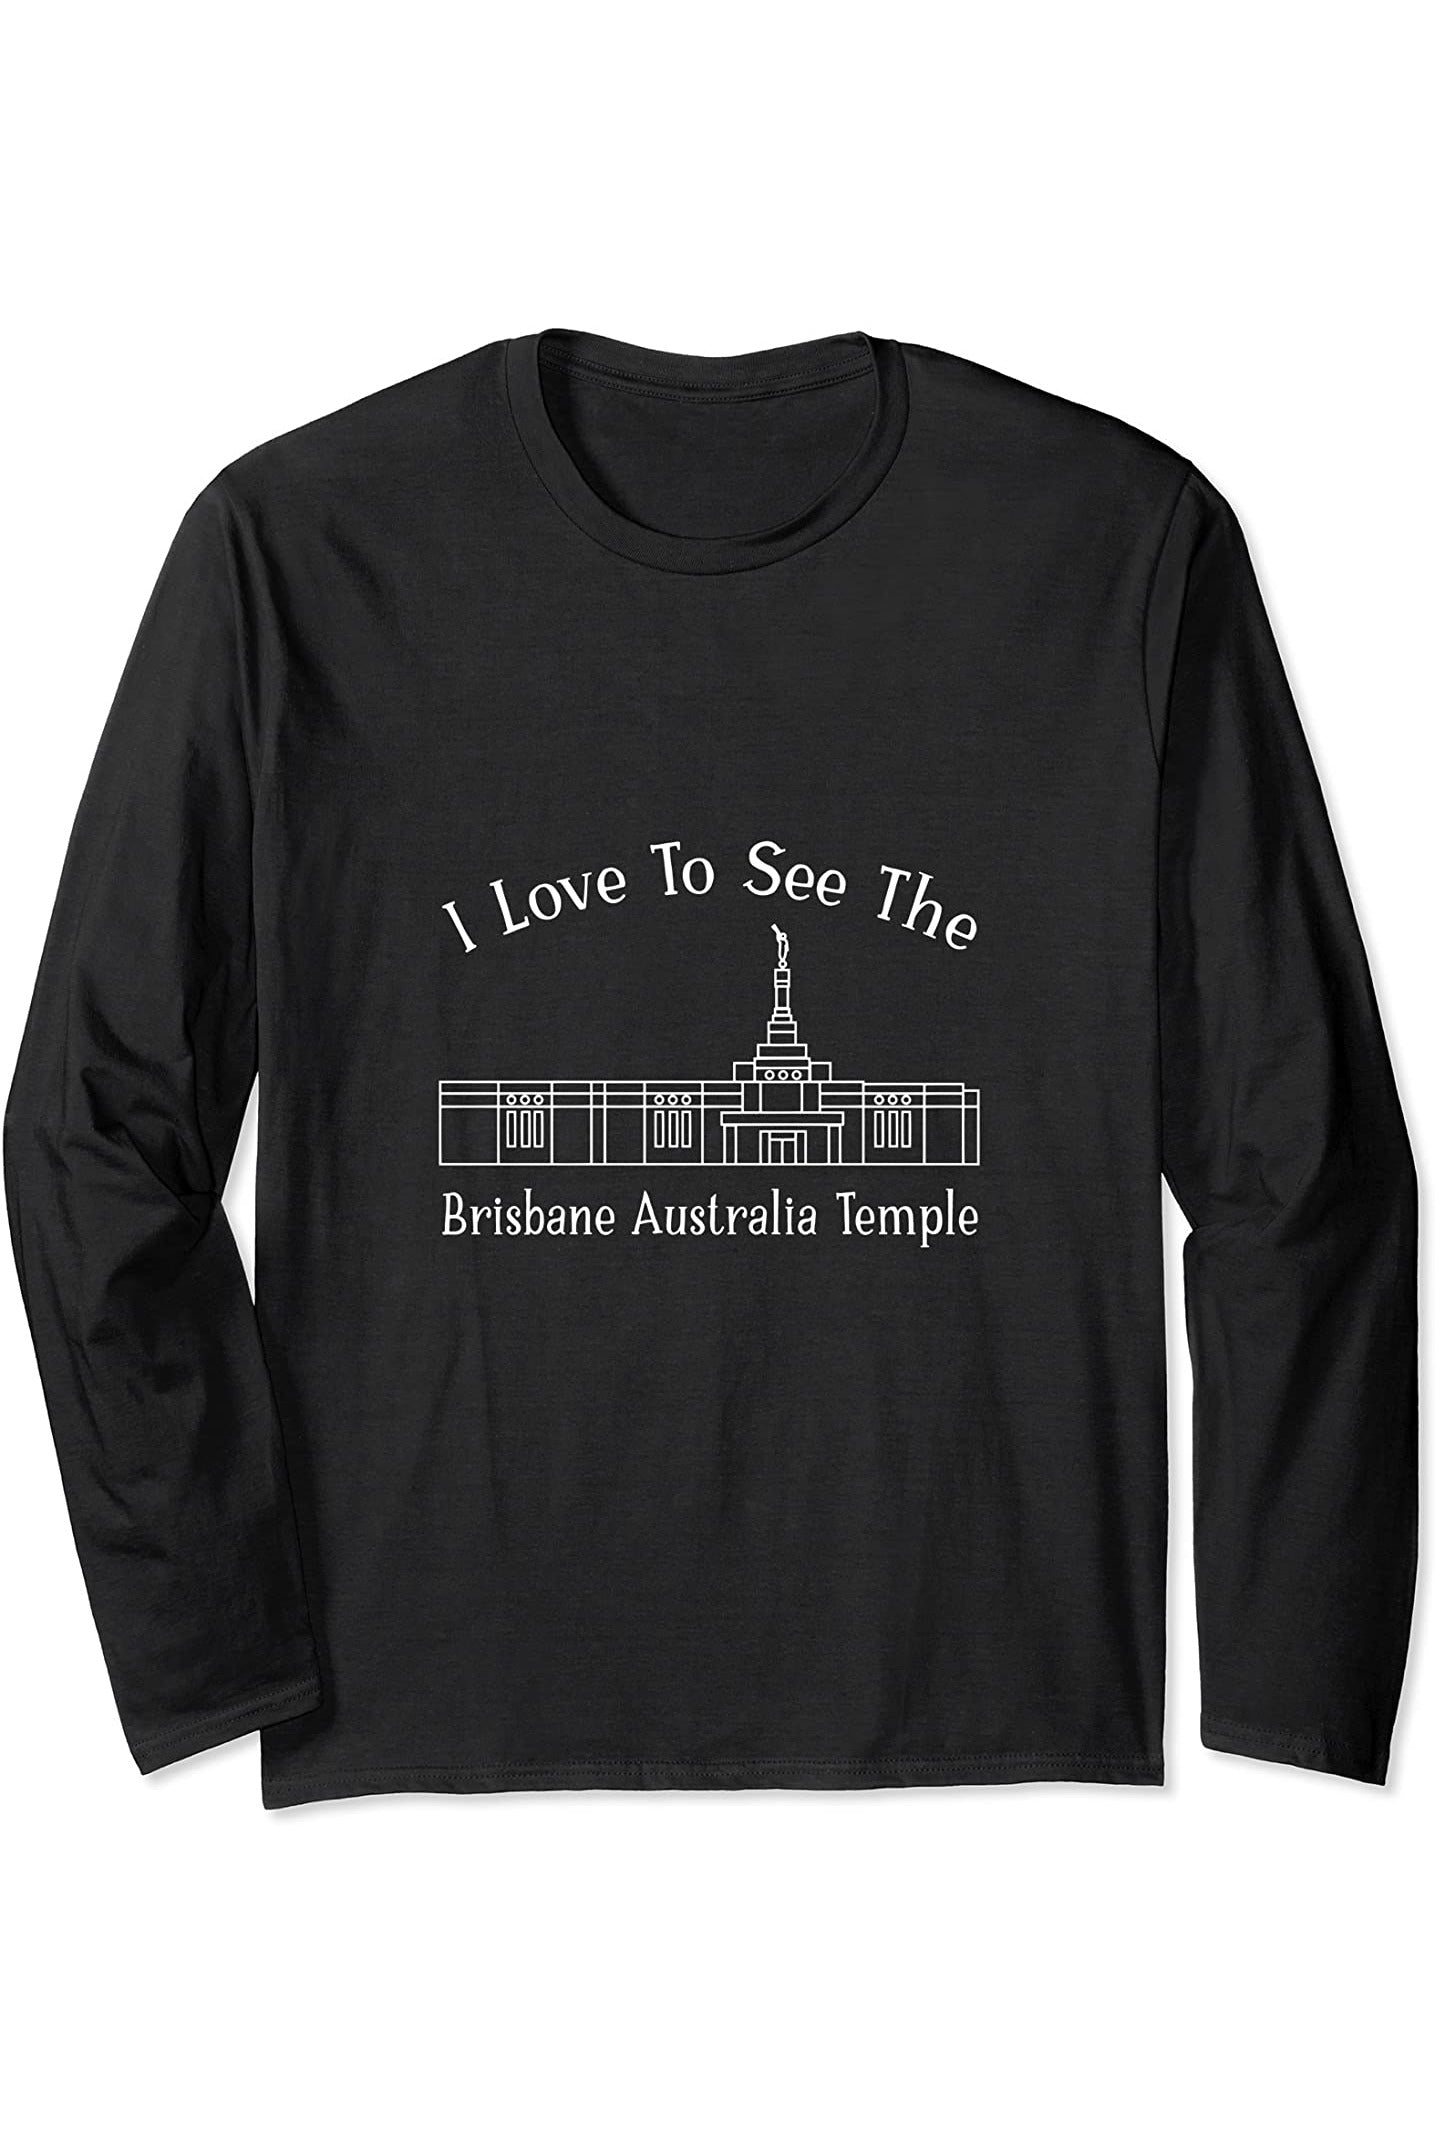 Brisbane Australia Temple Long Sleeve T-Shirt - Happy Style (English) US